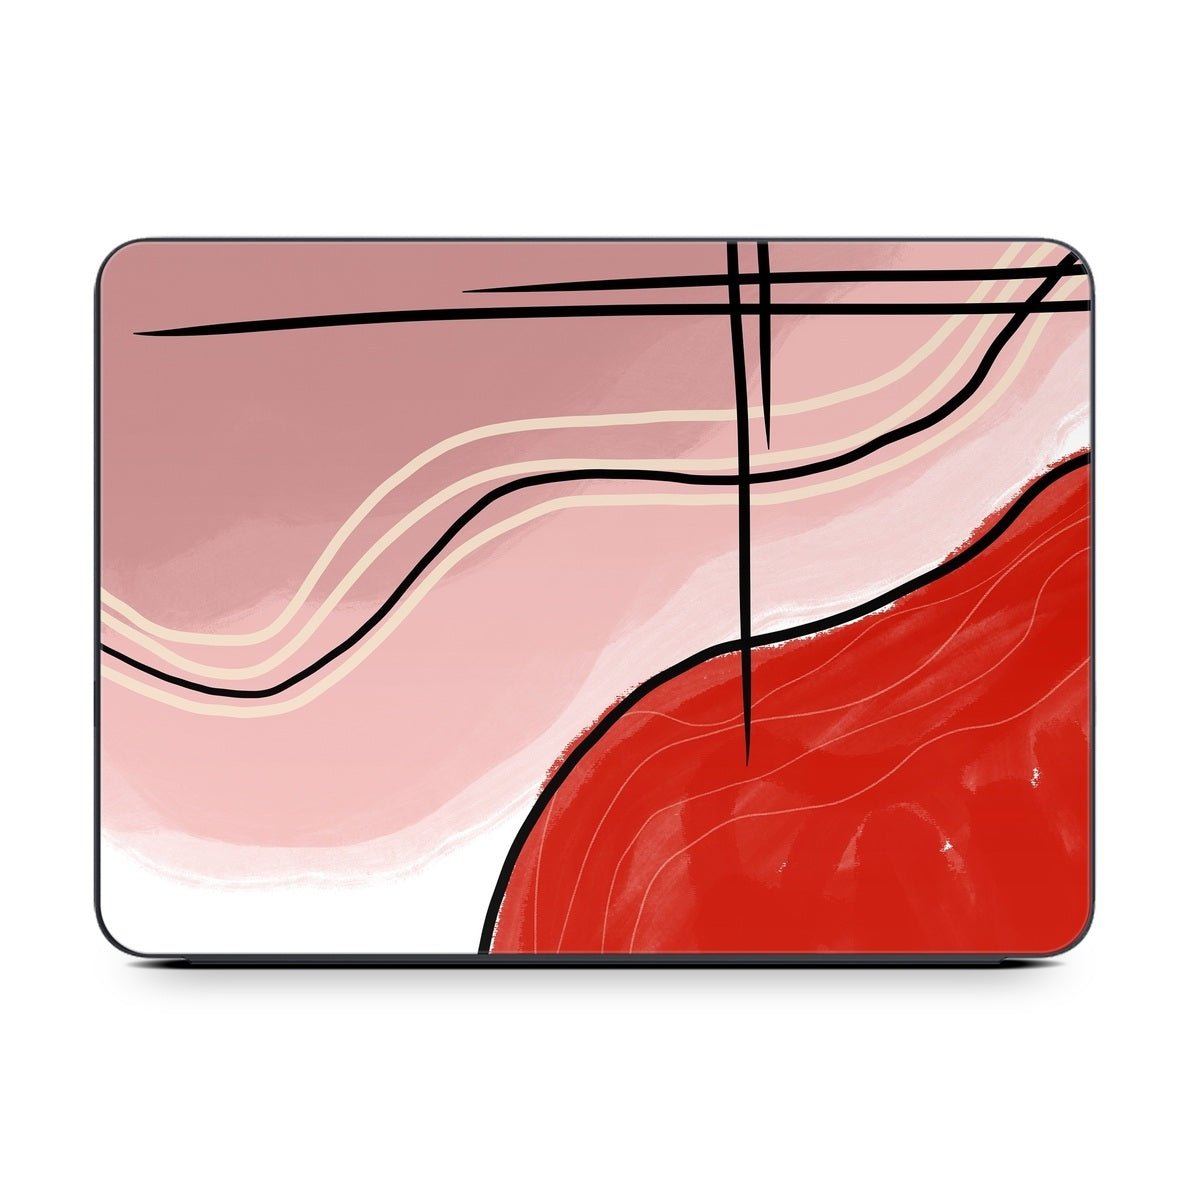 Abstract Red - Apple Smart Keyboard Folio Skin - Aleeya Marie Designs - DecalGirl